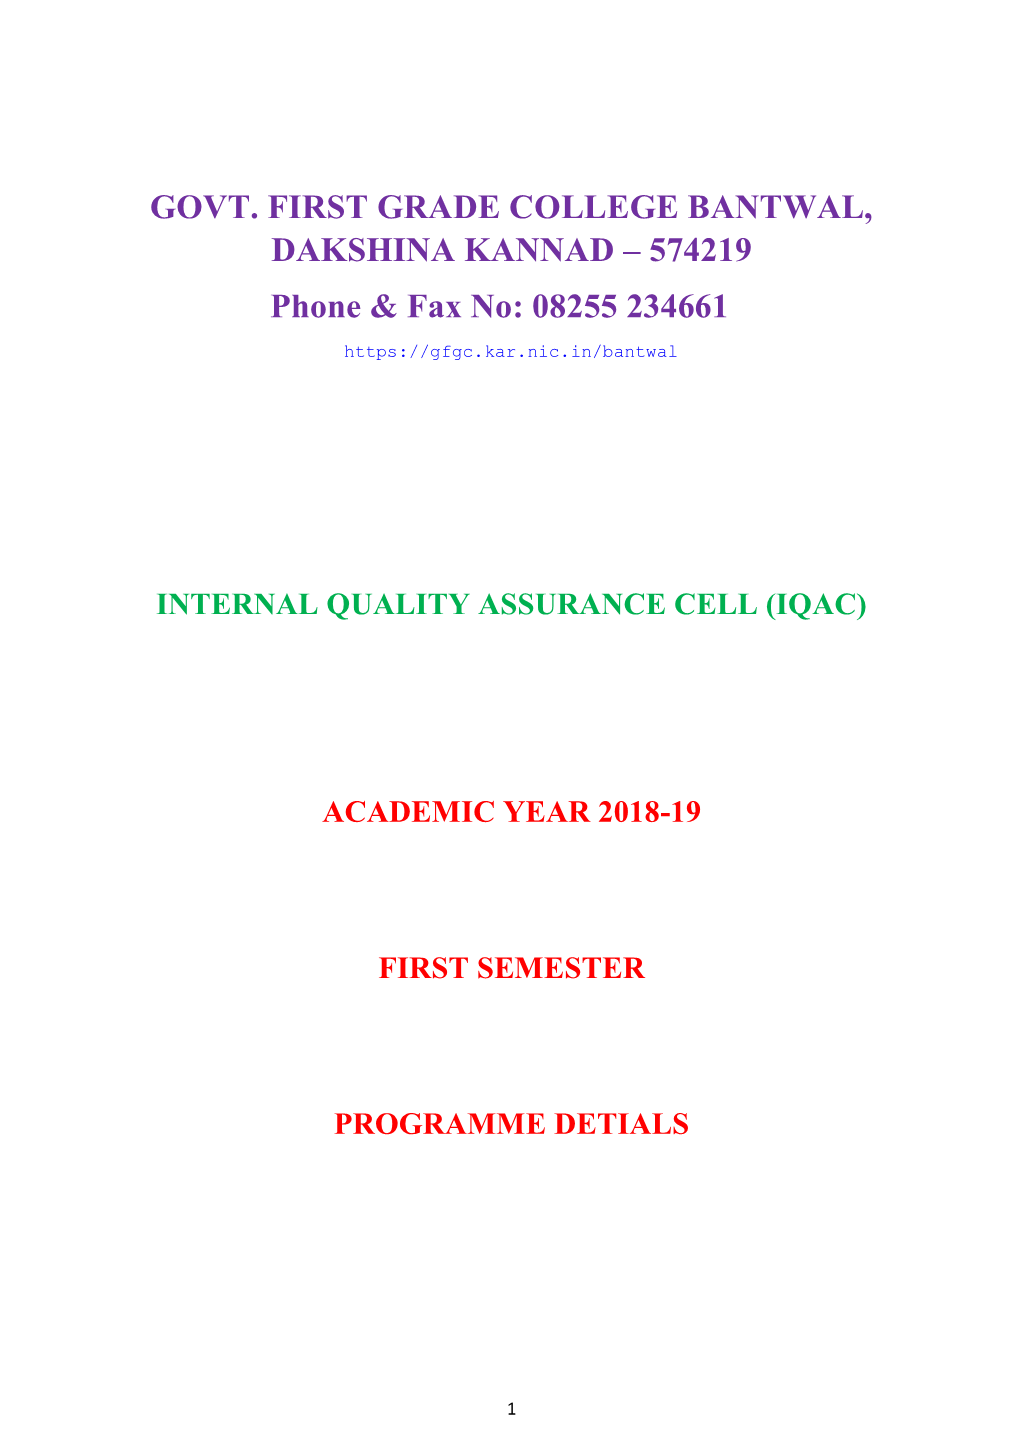 GOVT. FIRST GRADE COLLEGE BANTWAL, DAKSHINA KANNAD – 574219 Phone & Fax No: 08255 234661